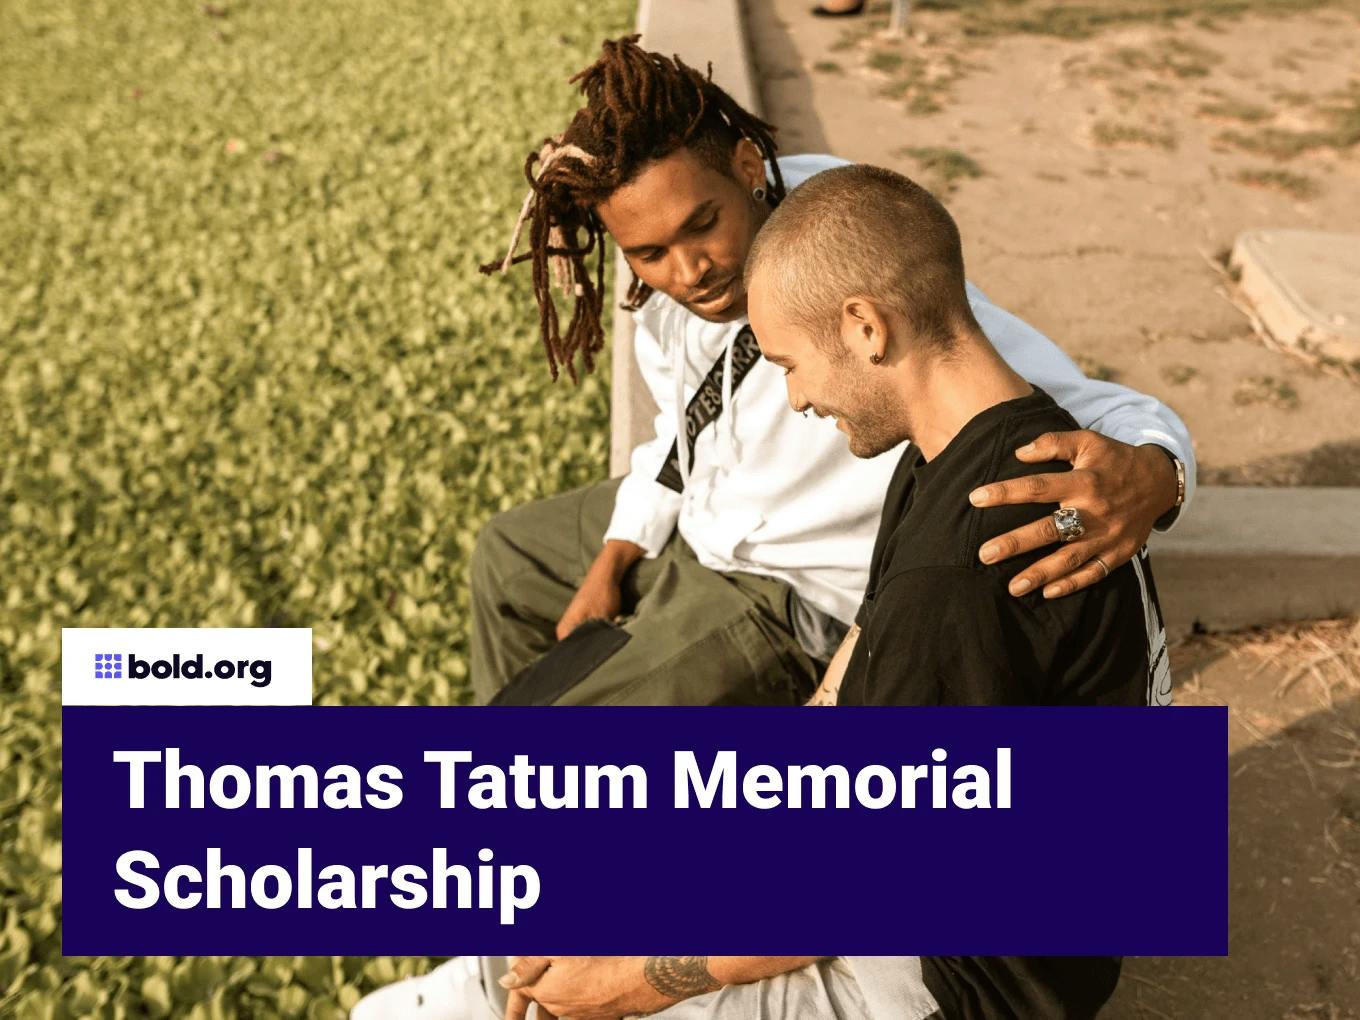 Thomas Tatum Memorial Scholarship